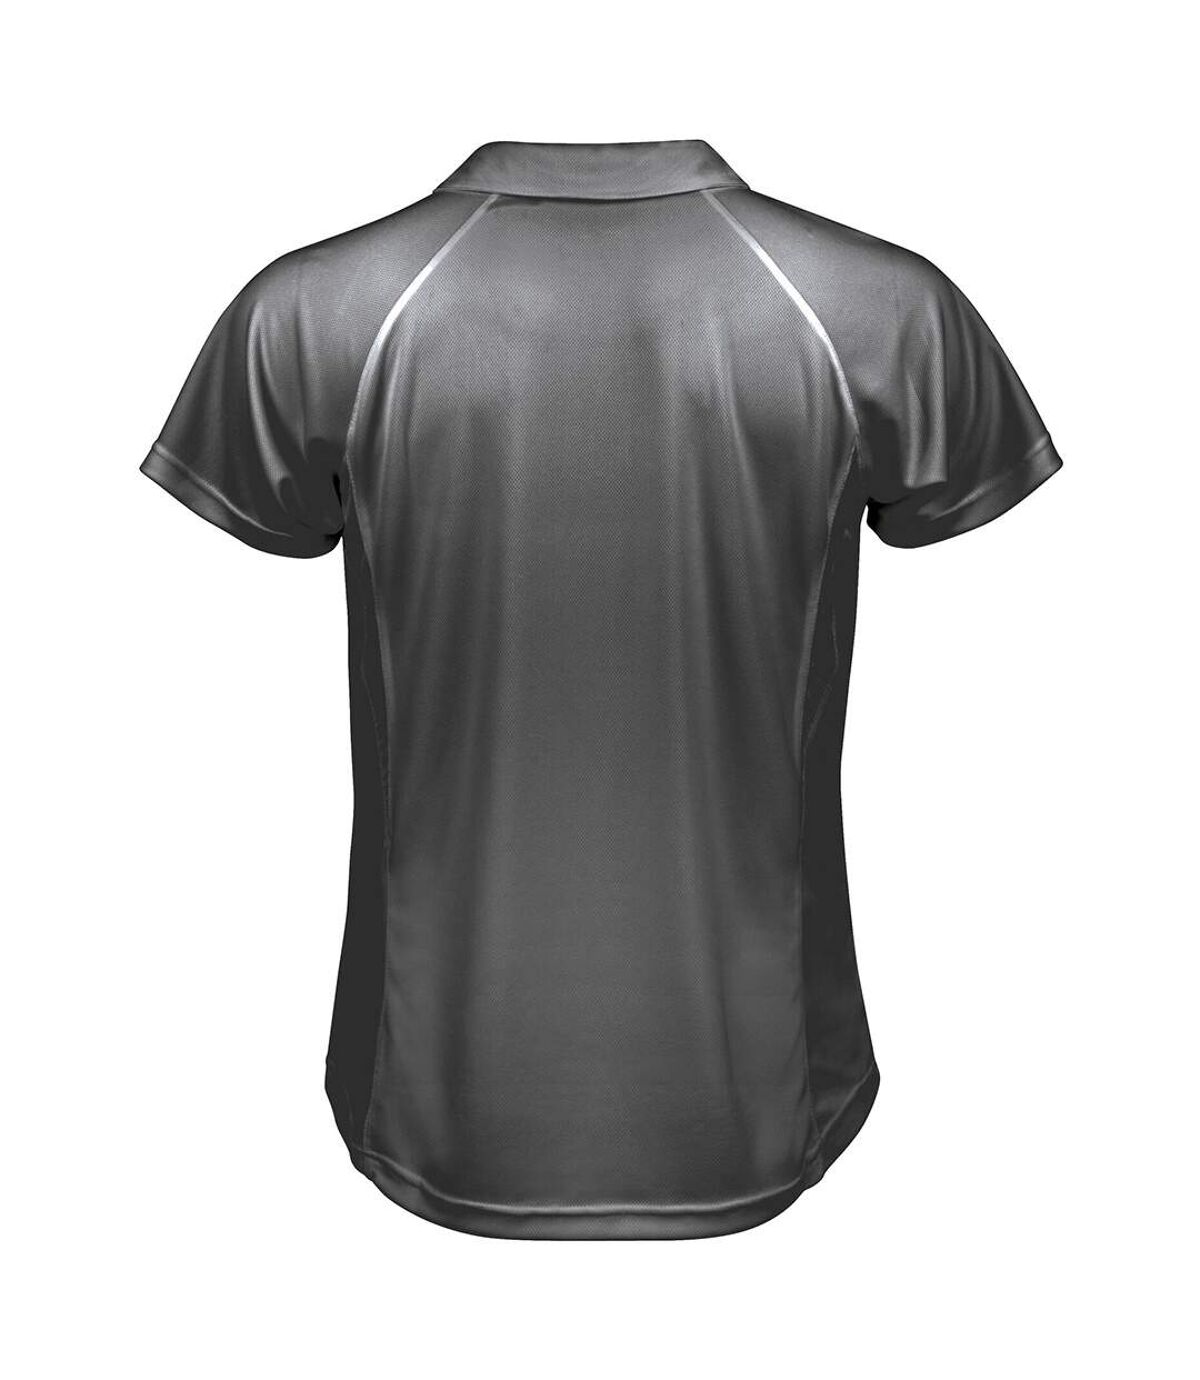 Spiro Mens Sports Team Spirit Performance Polo Shirt (Grey/Lime) - UTRW1470